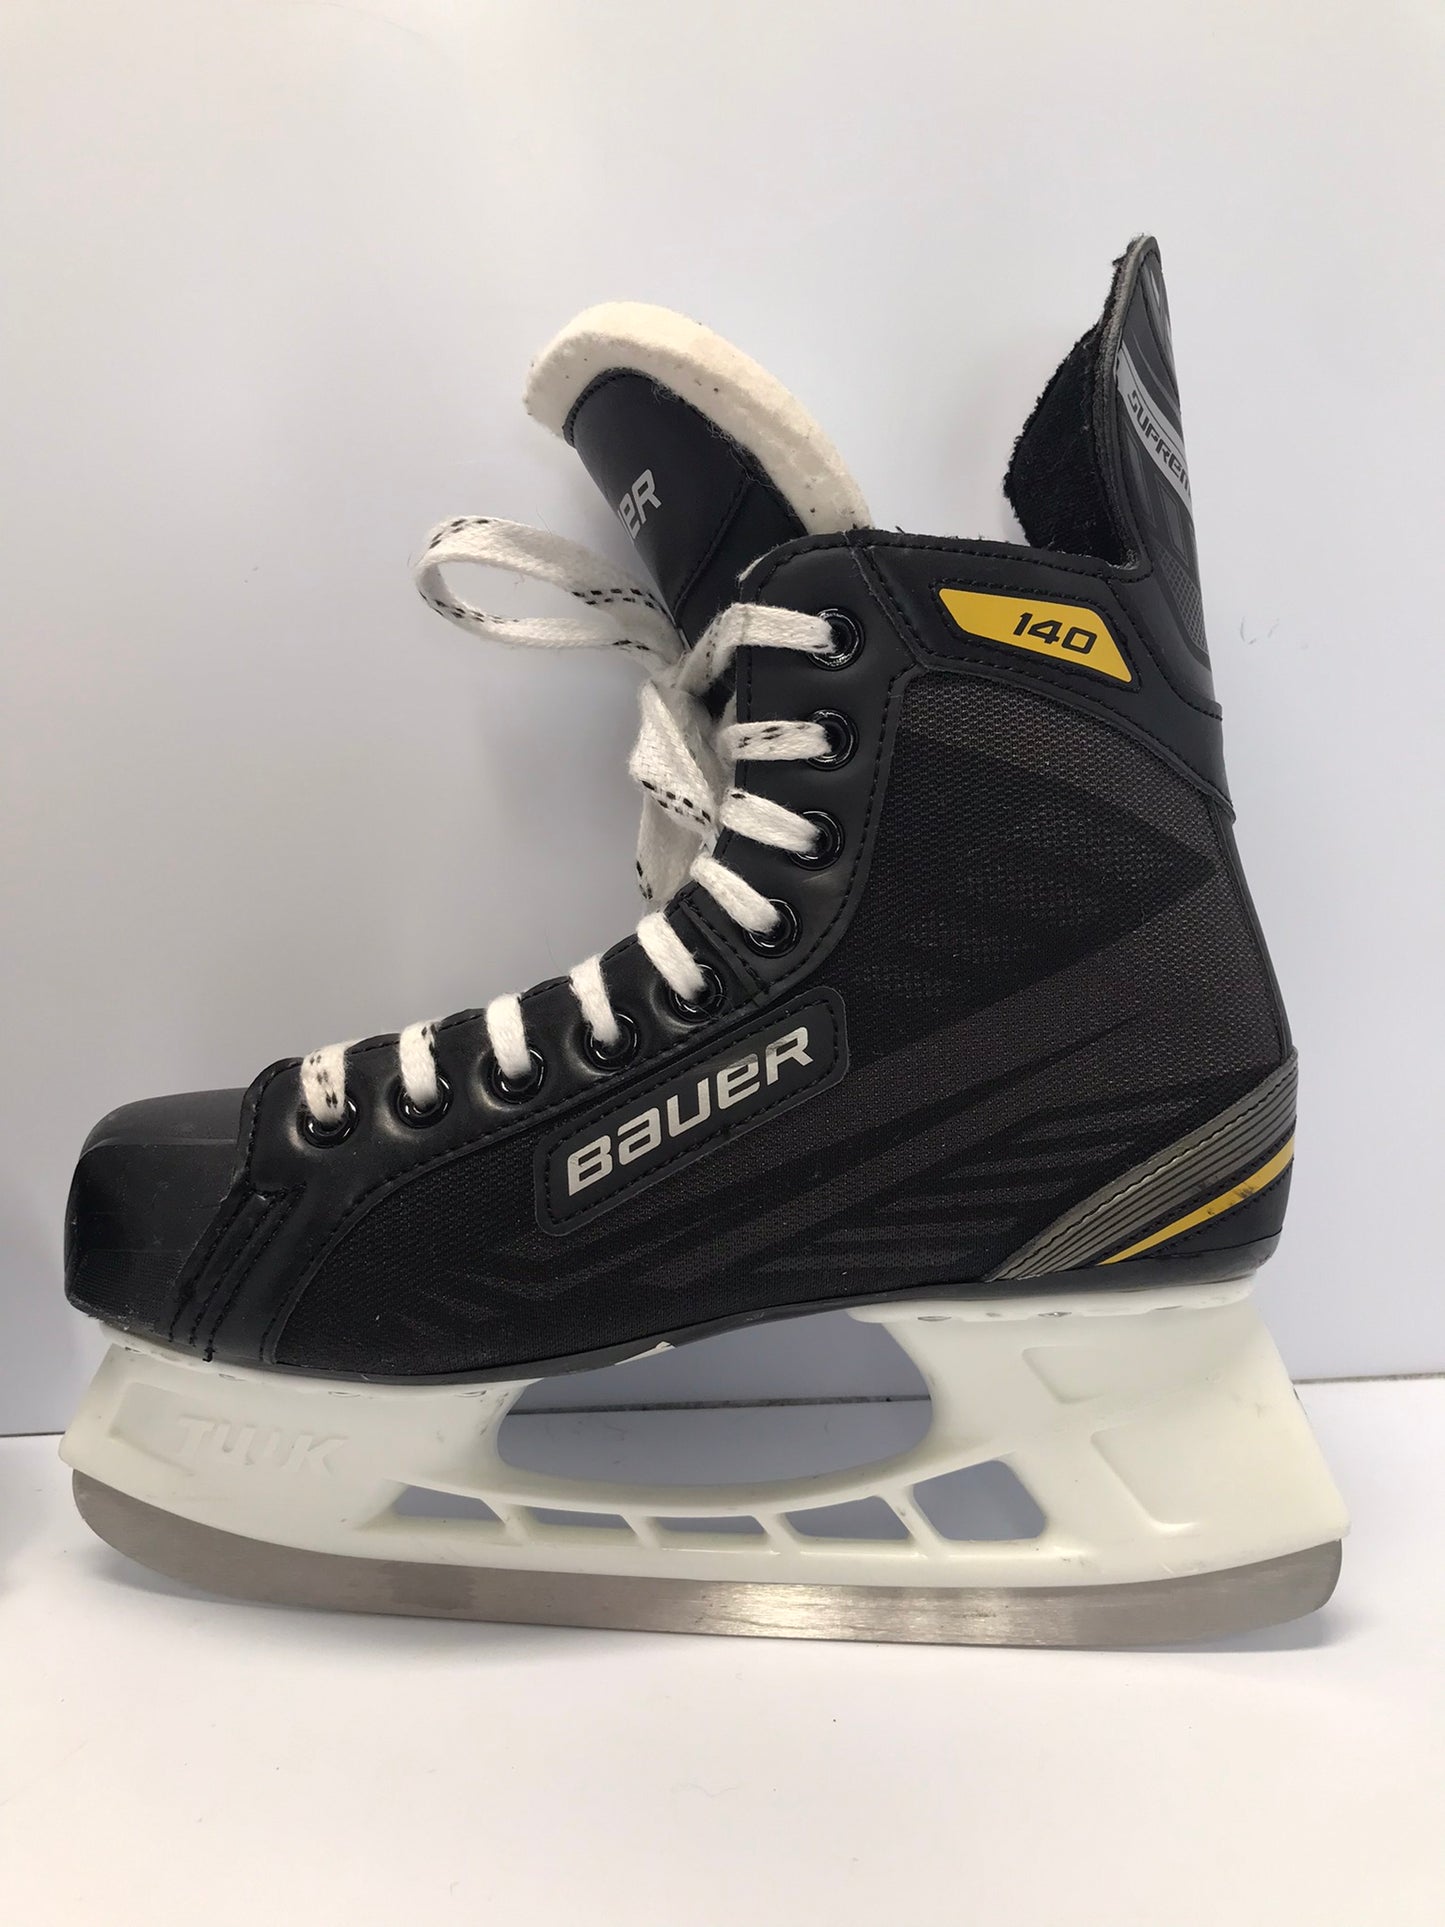 Hockey Skates Men Size 6 Shoe 5 Skate Size Bauer Supreme Like New Perfect